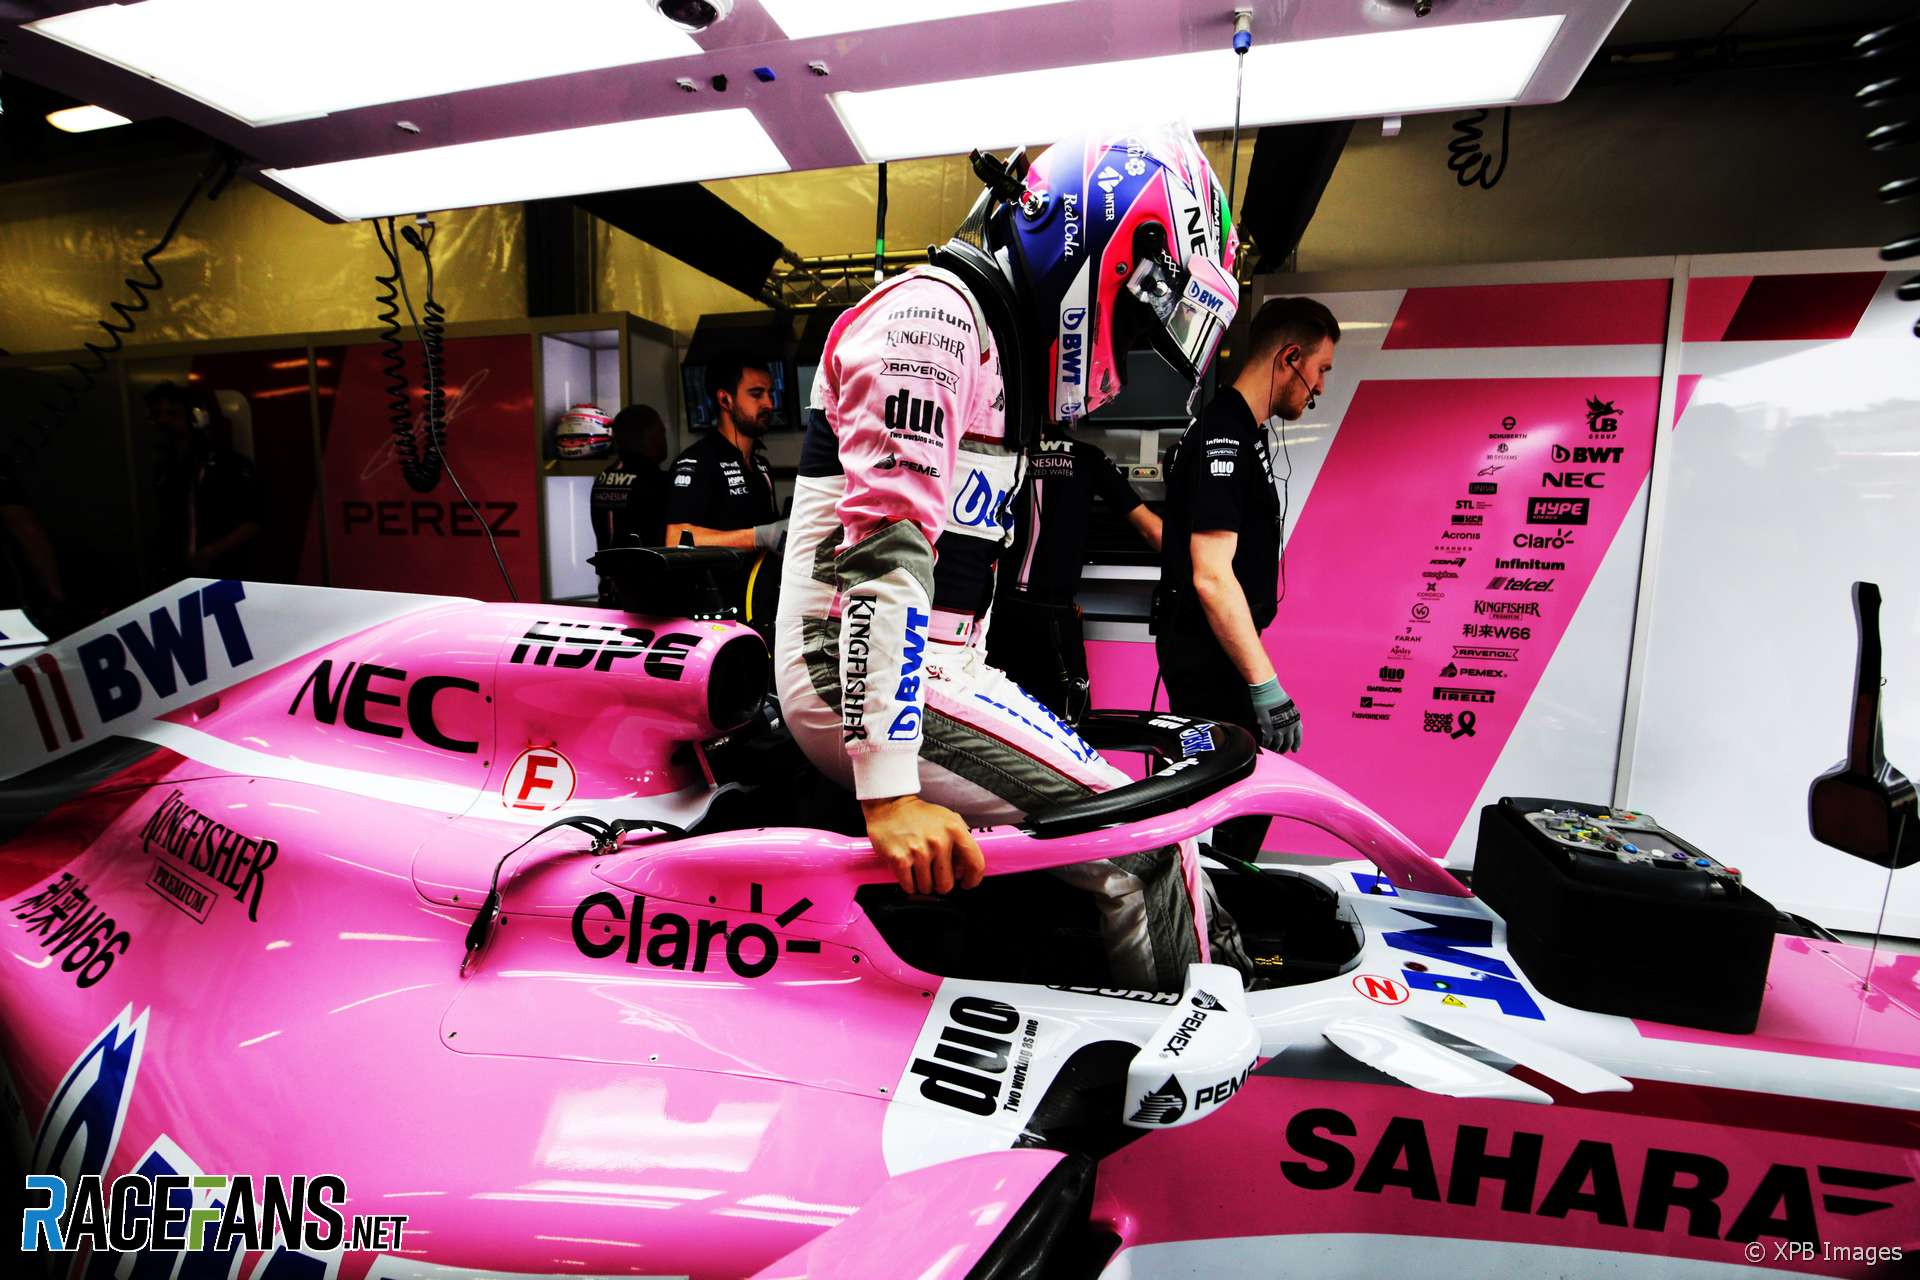 Sergio Perez, Force India, Baku City Circuit, 2018